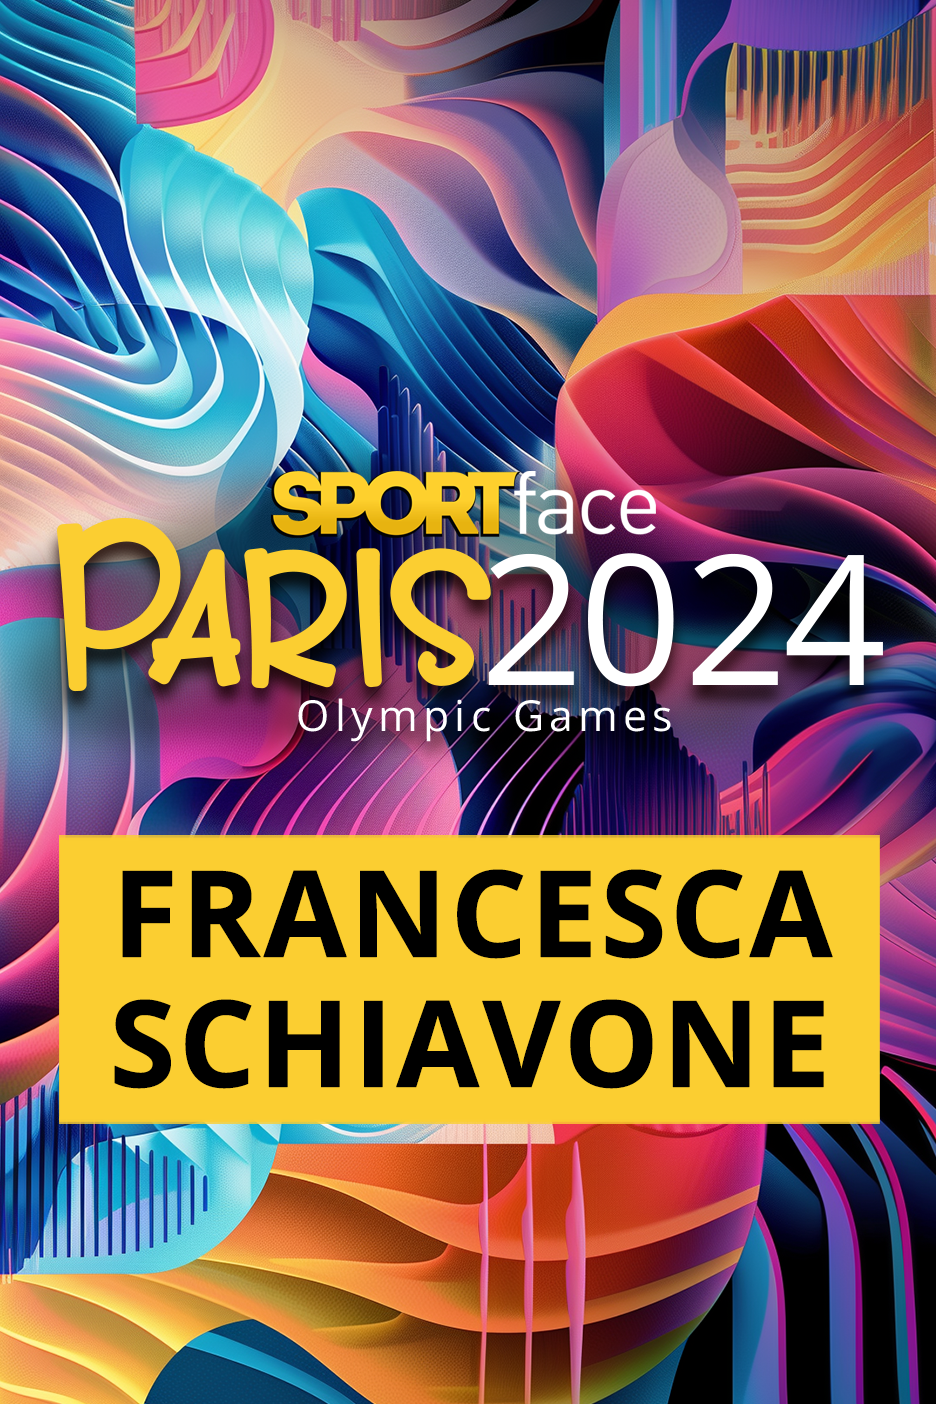 Francesca Schiavone - Paris 2024